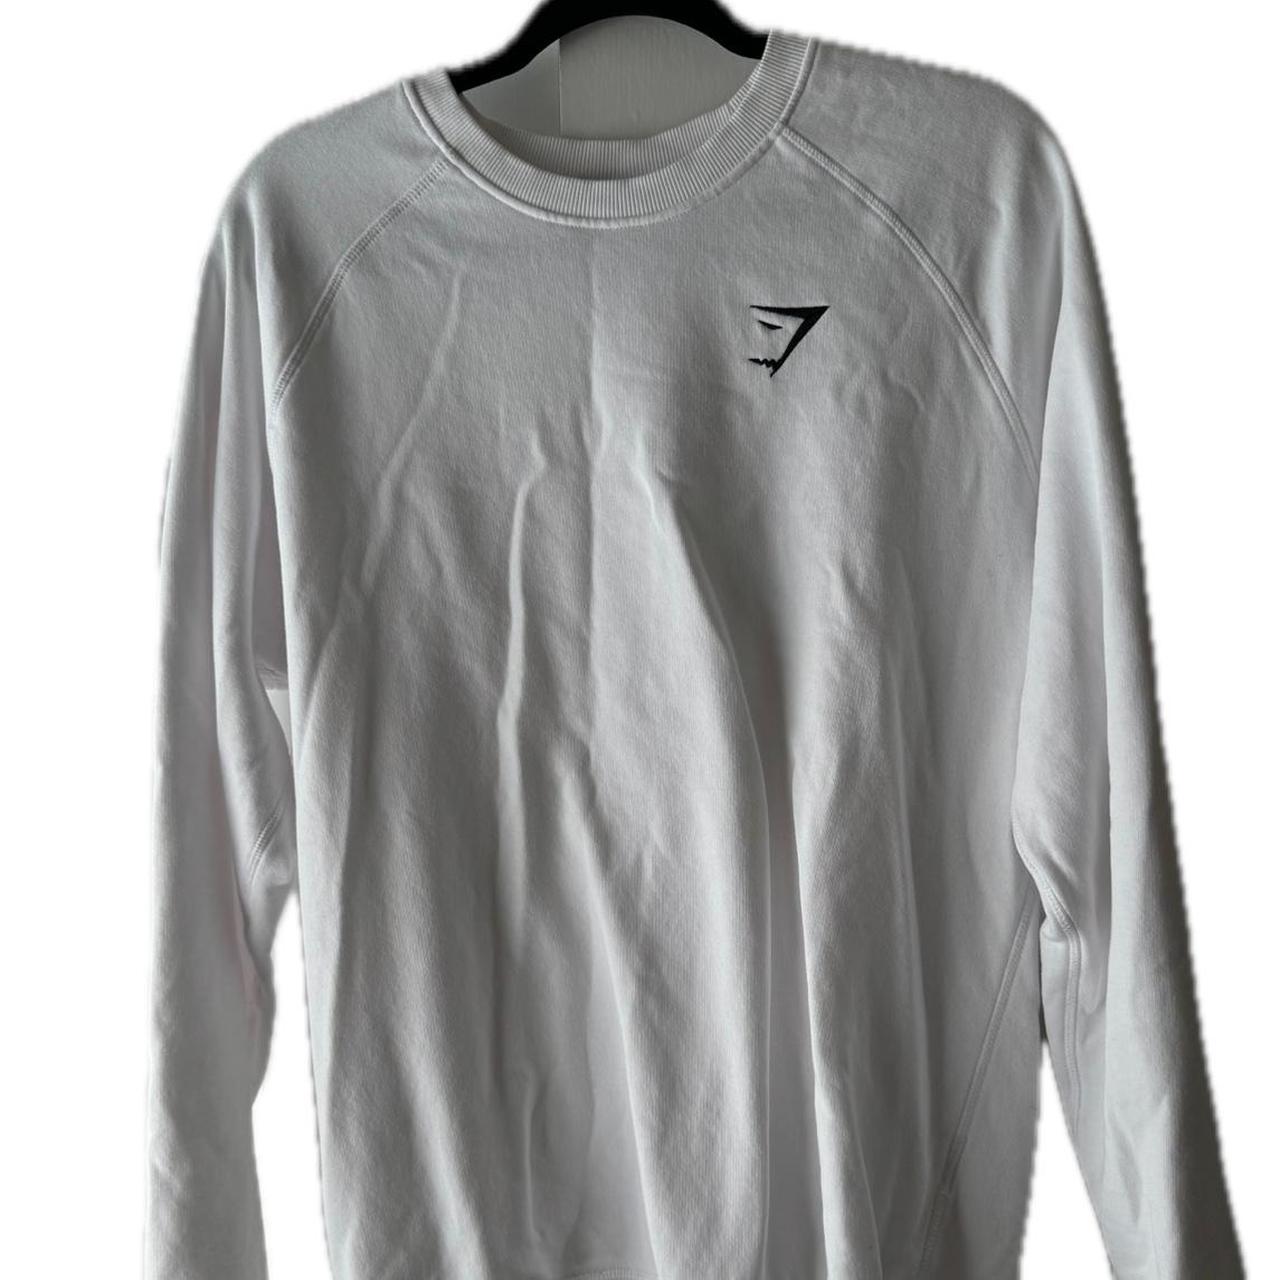 Gymshark Avant Seamless Compression T-shirt Men's - Depop